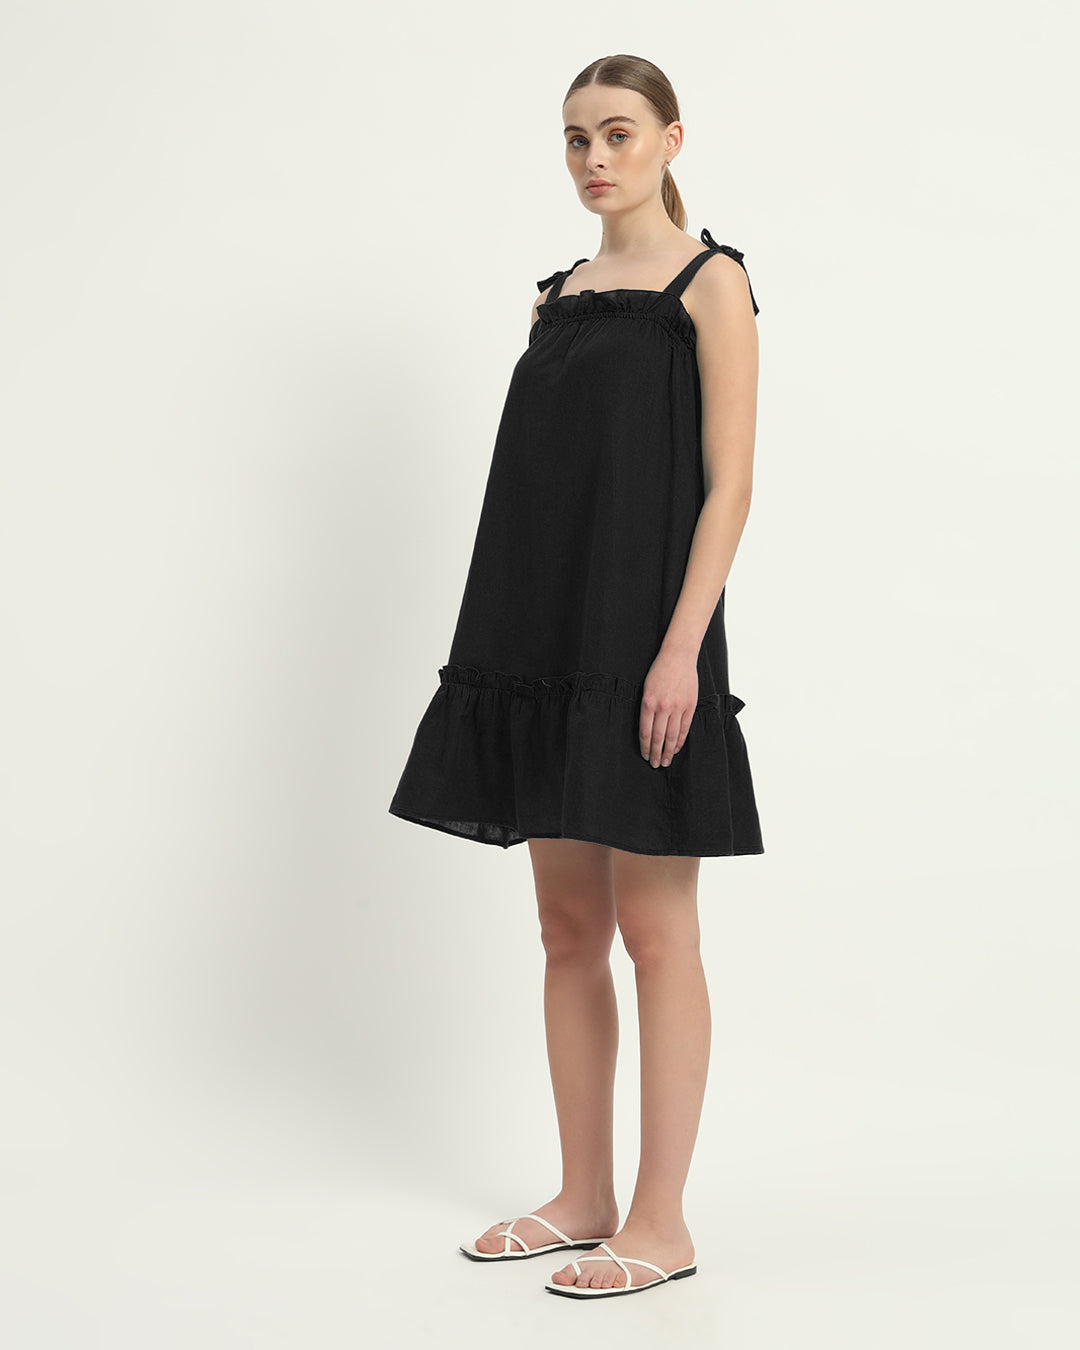 The Noir Amalfi Cotton Dress